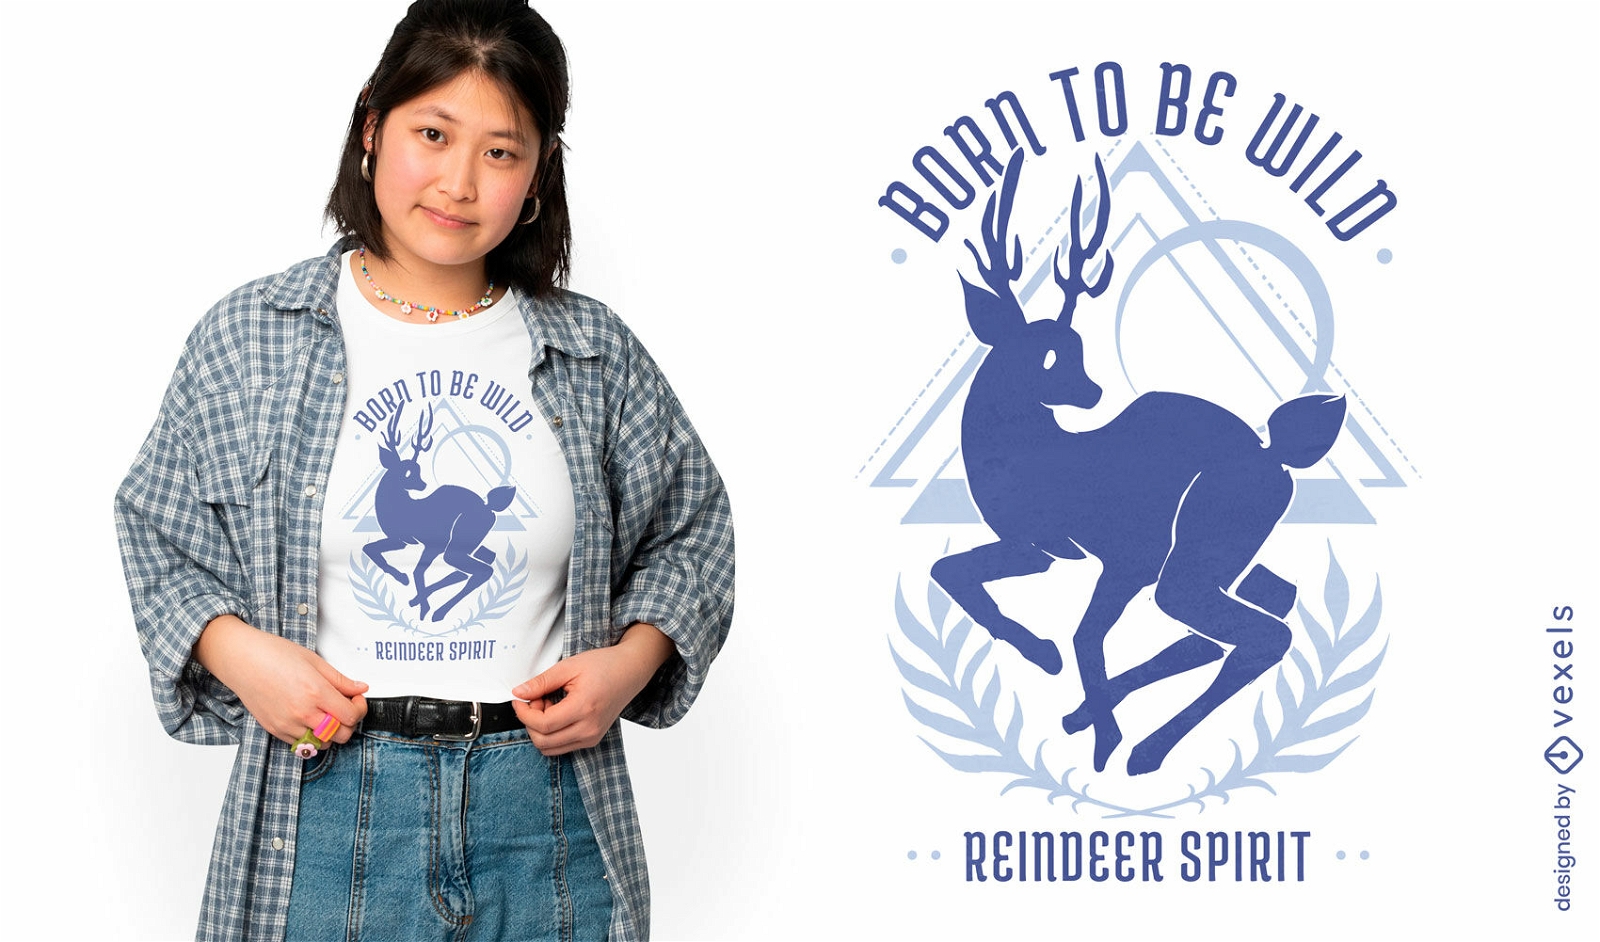 Reindeer spirit t-shirt design